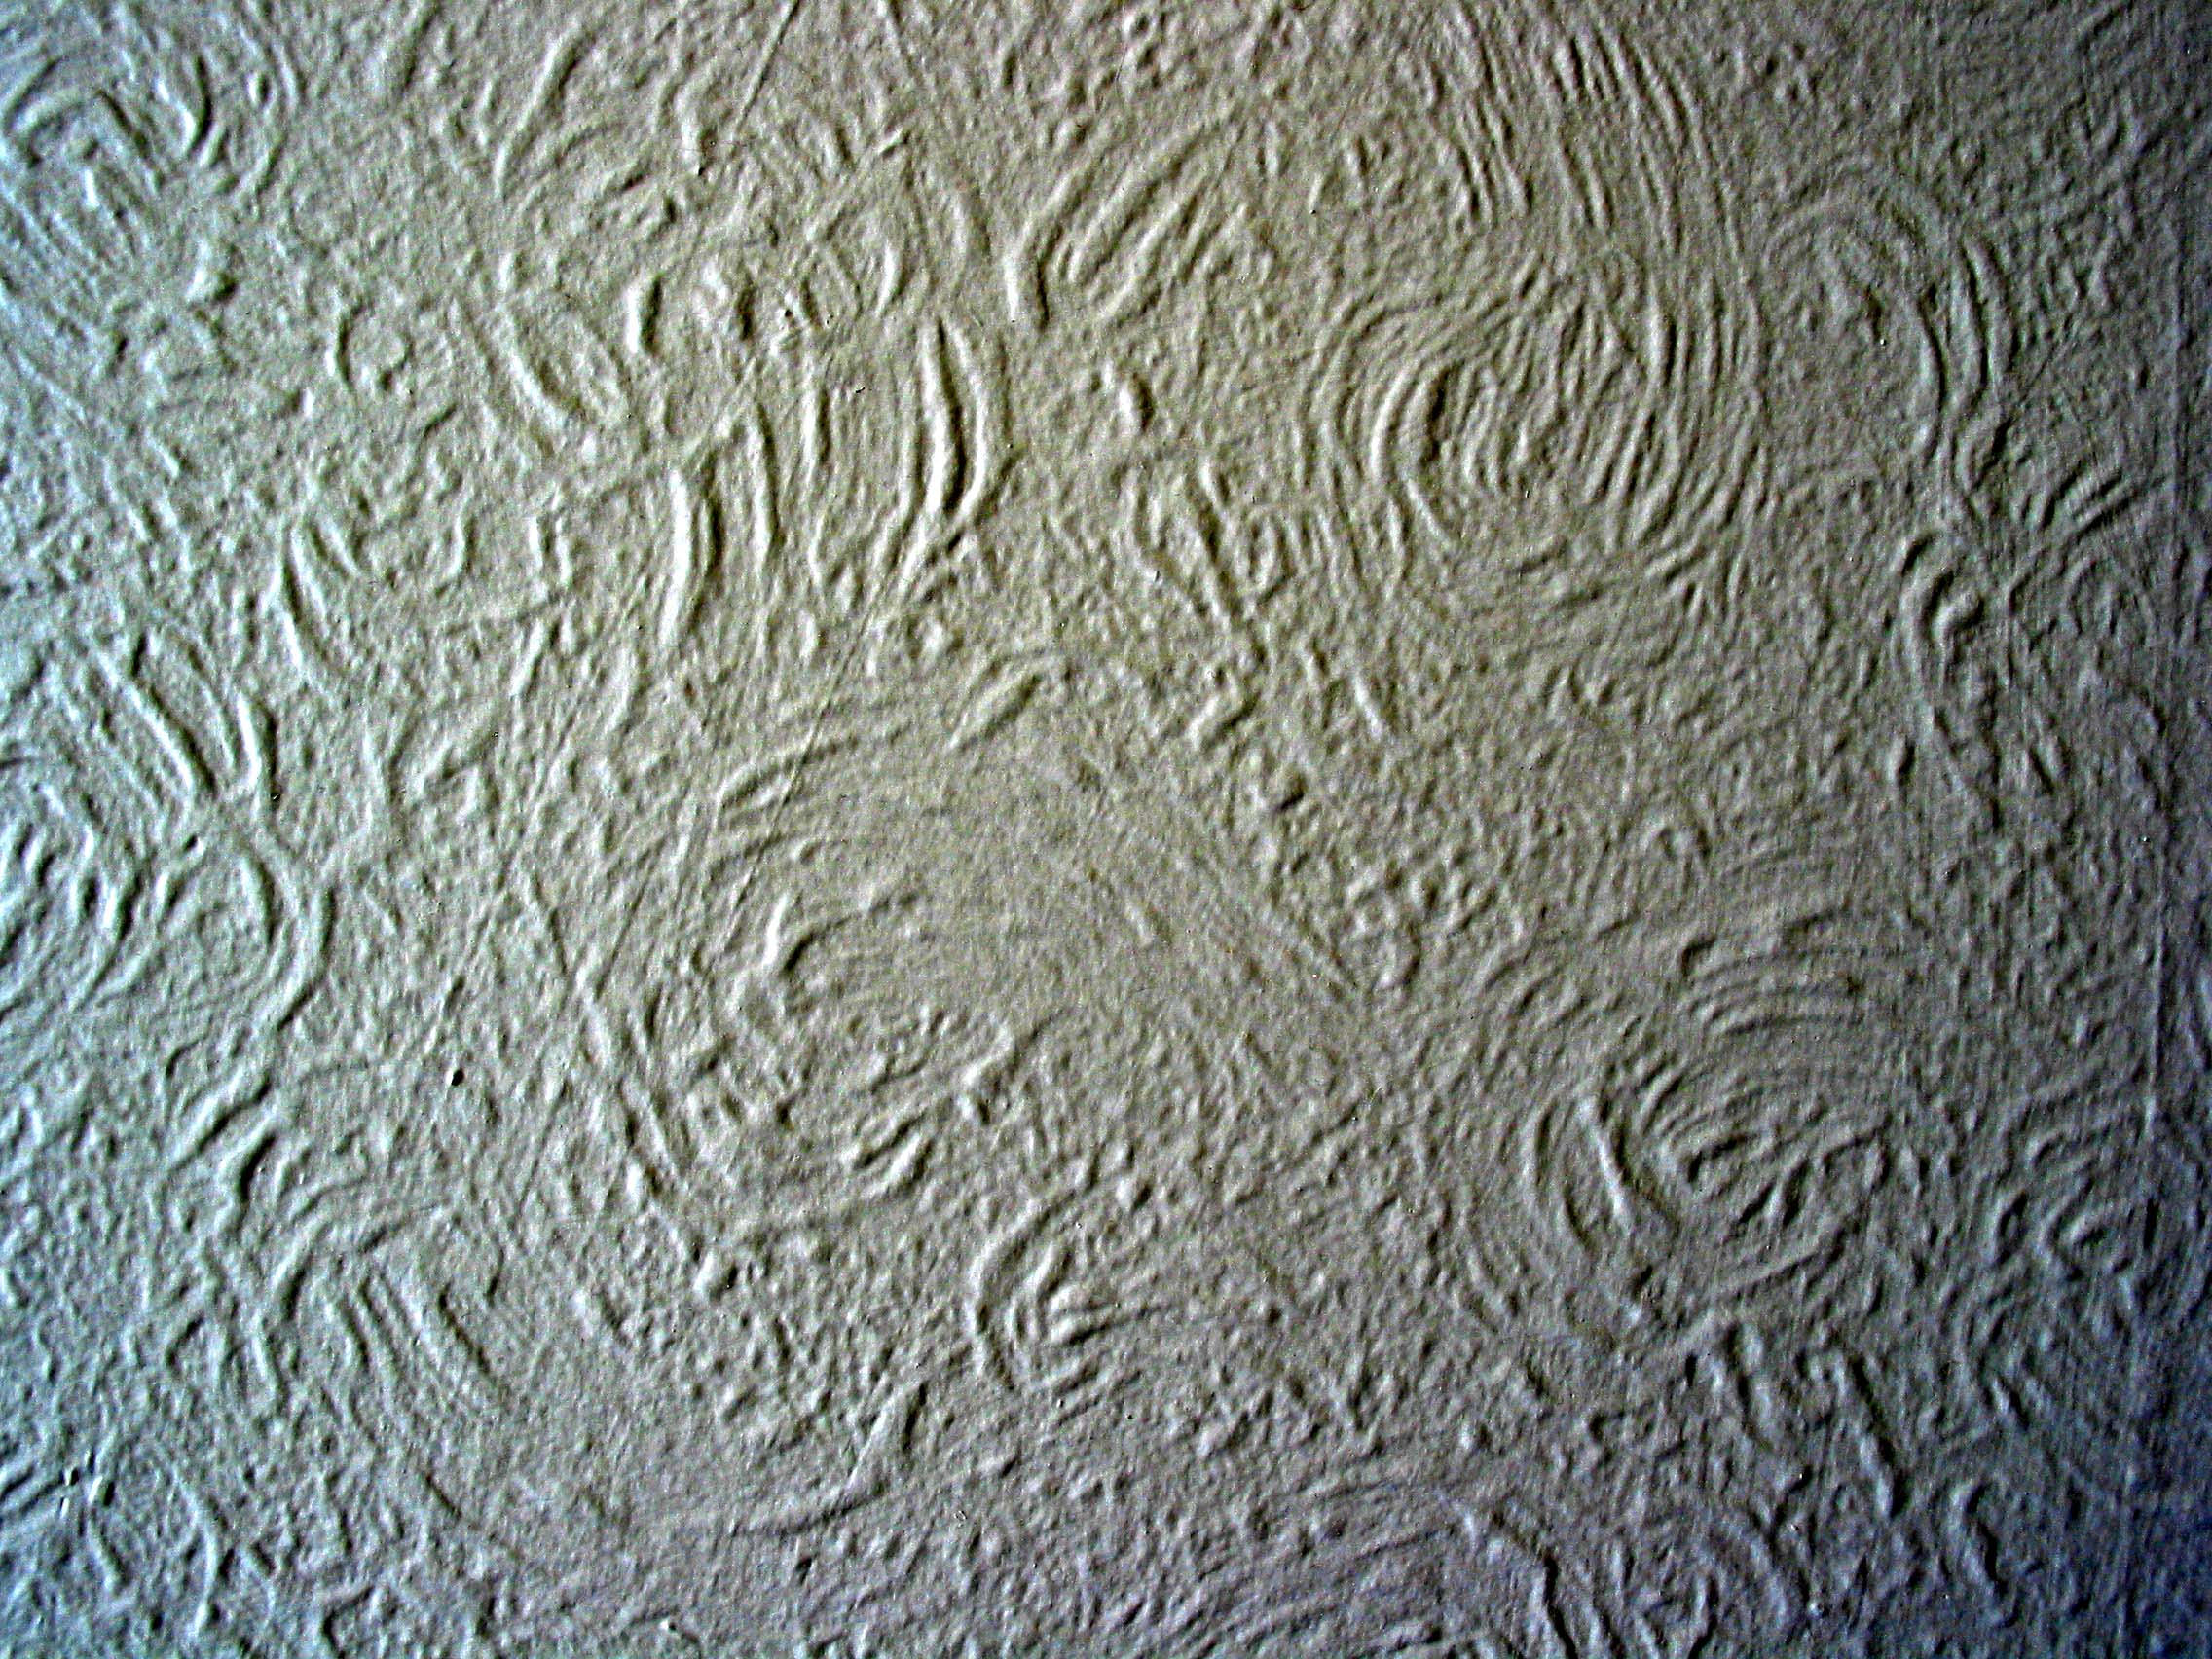 texture wallpaper for home 2017 - Grasscloth Wallpaper
